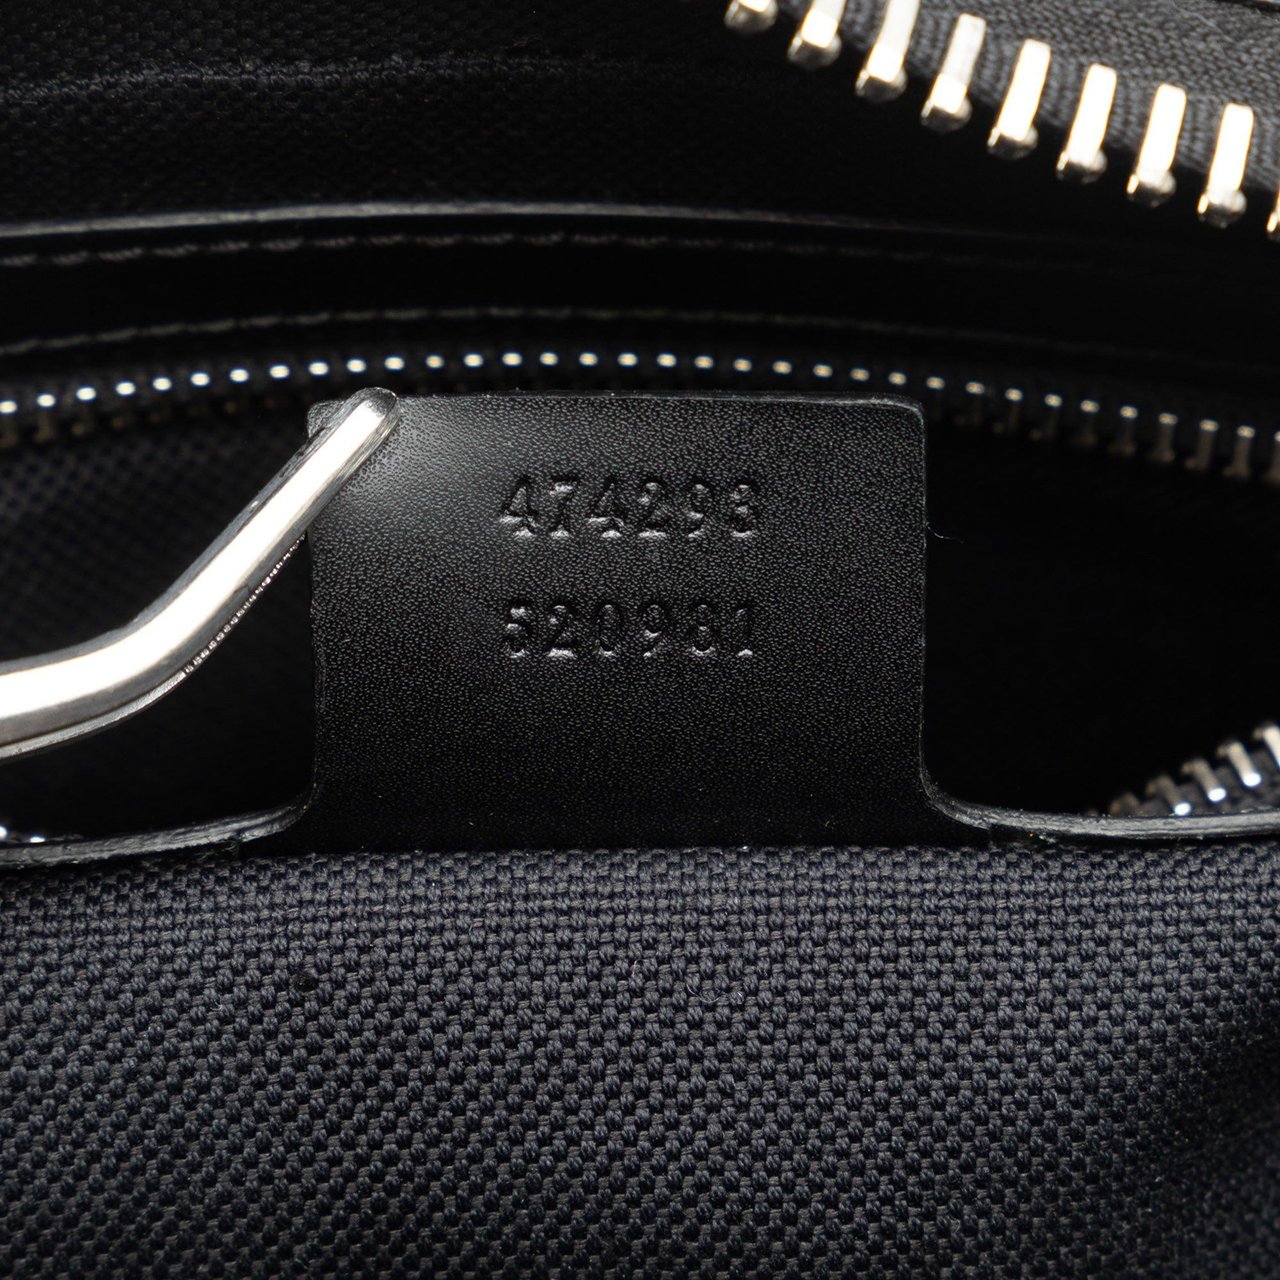 Gucci GG Supreme Web Belt Bag Zwart